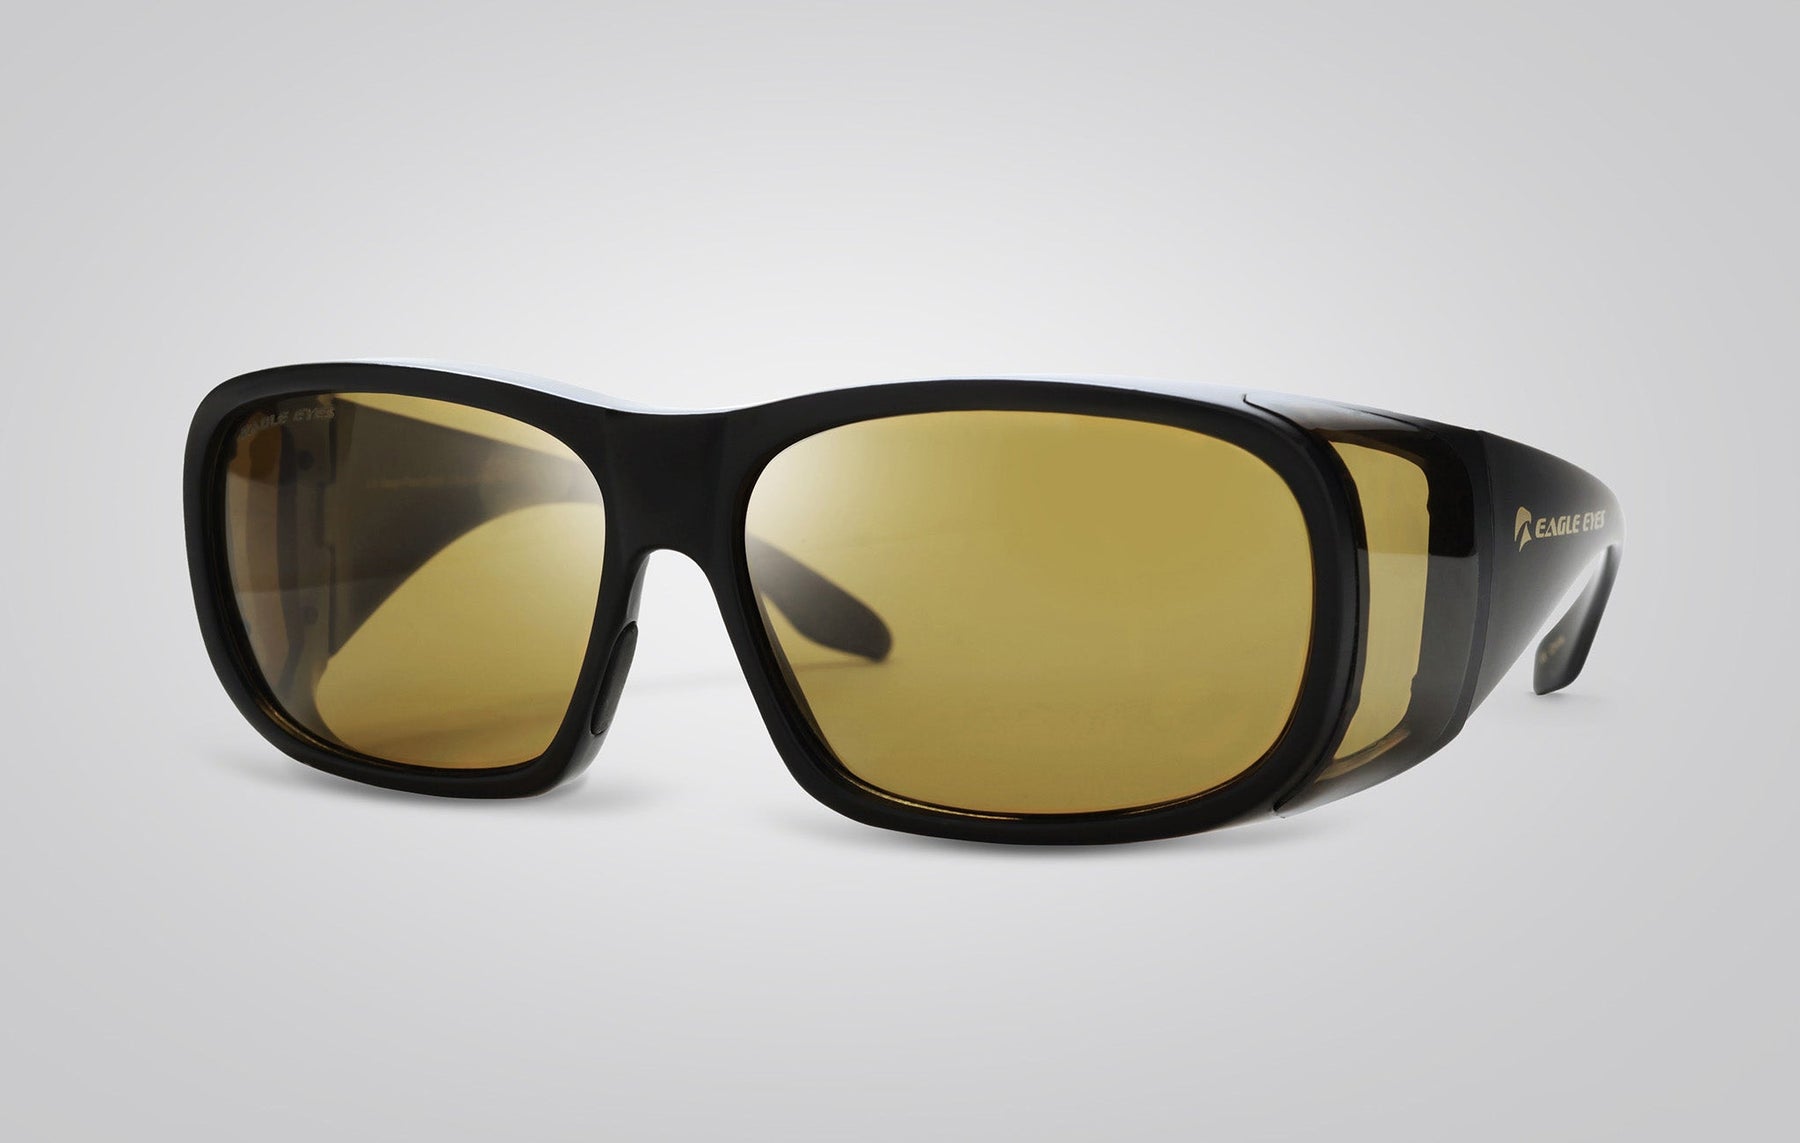 3 Pairs Fit Over Sunglasses for Men Women Polarized Lens Wrap Over Glasses  Sunglasses Sport Oversized Eyeglasses for Driving